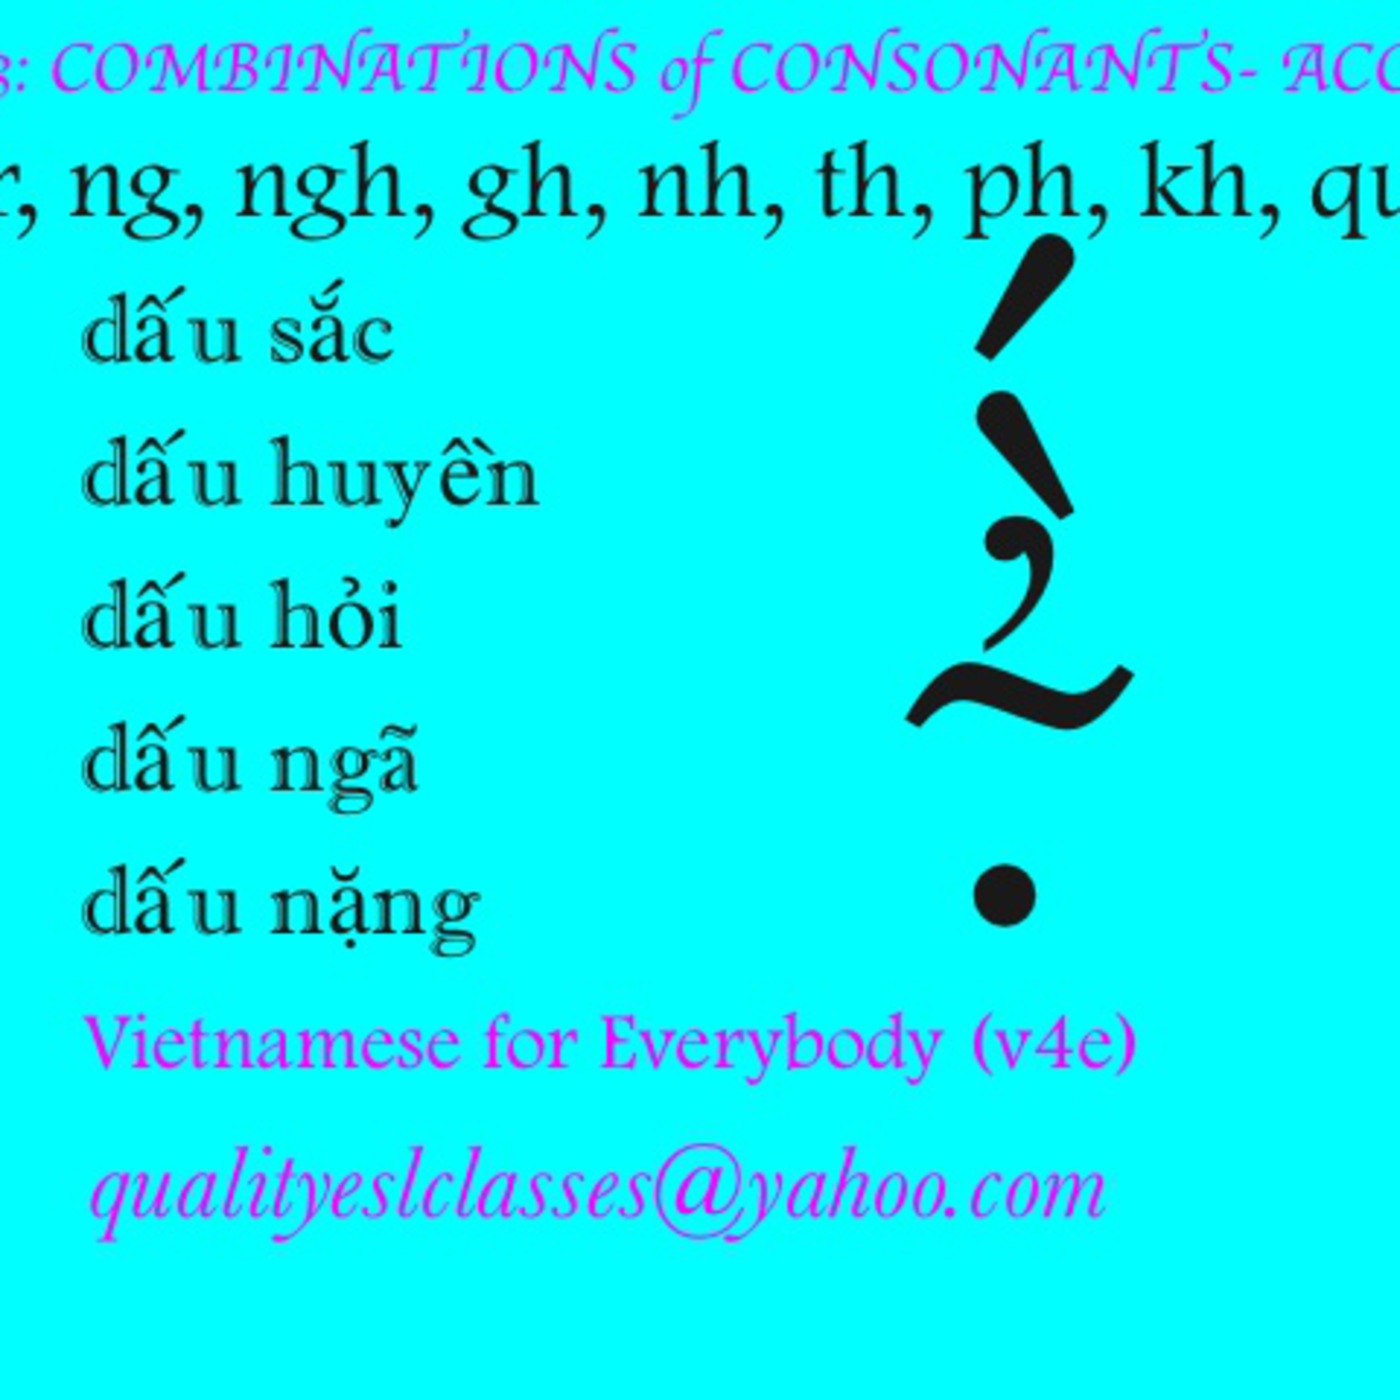 Vietnamese Lesson 3: Combinations of Consonants- Accents